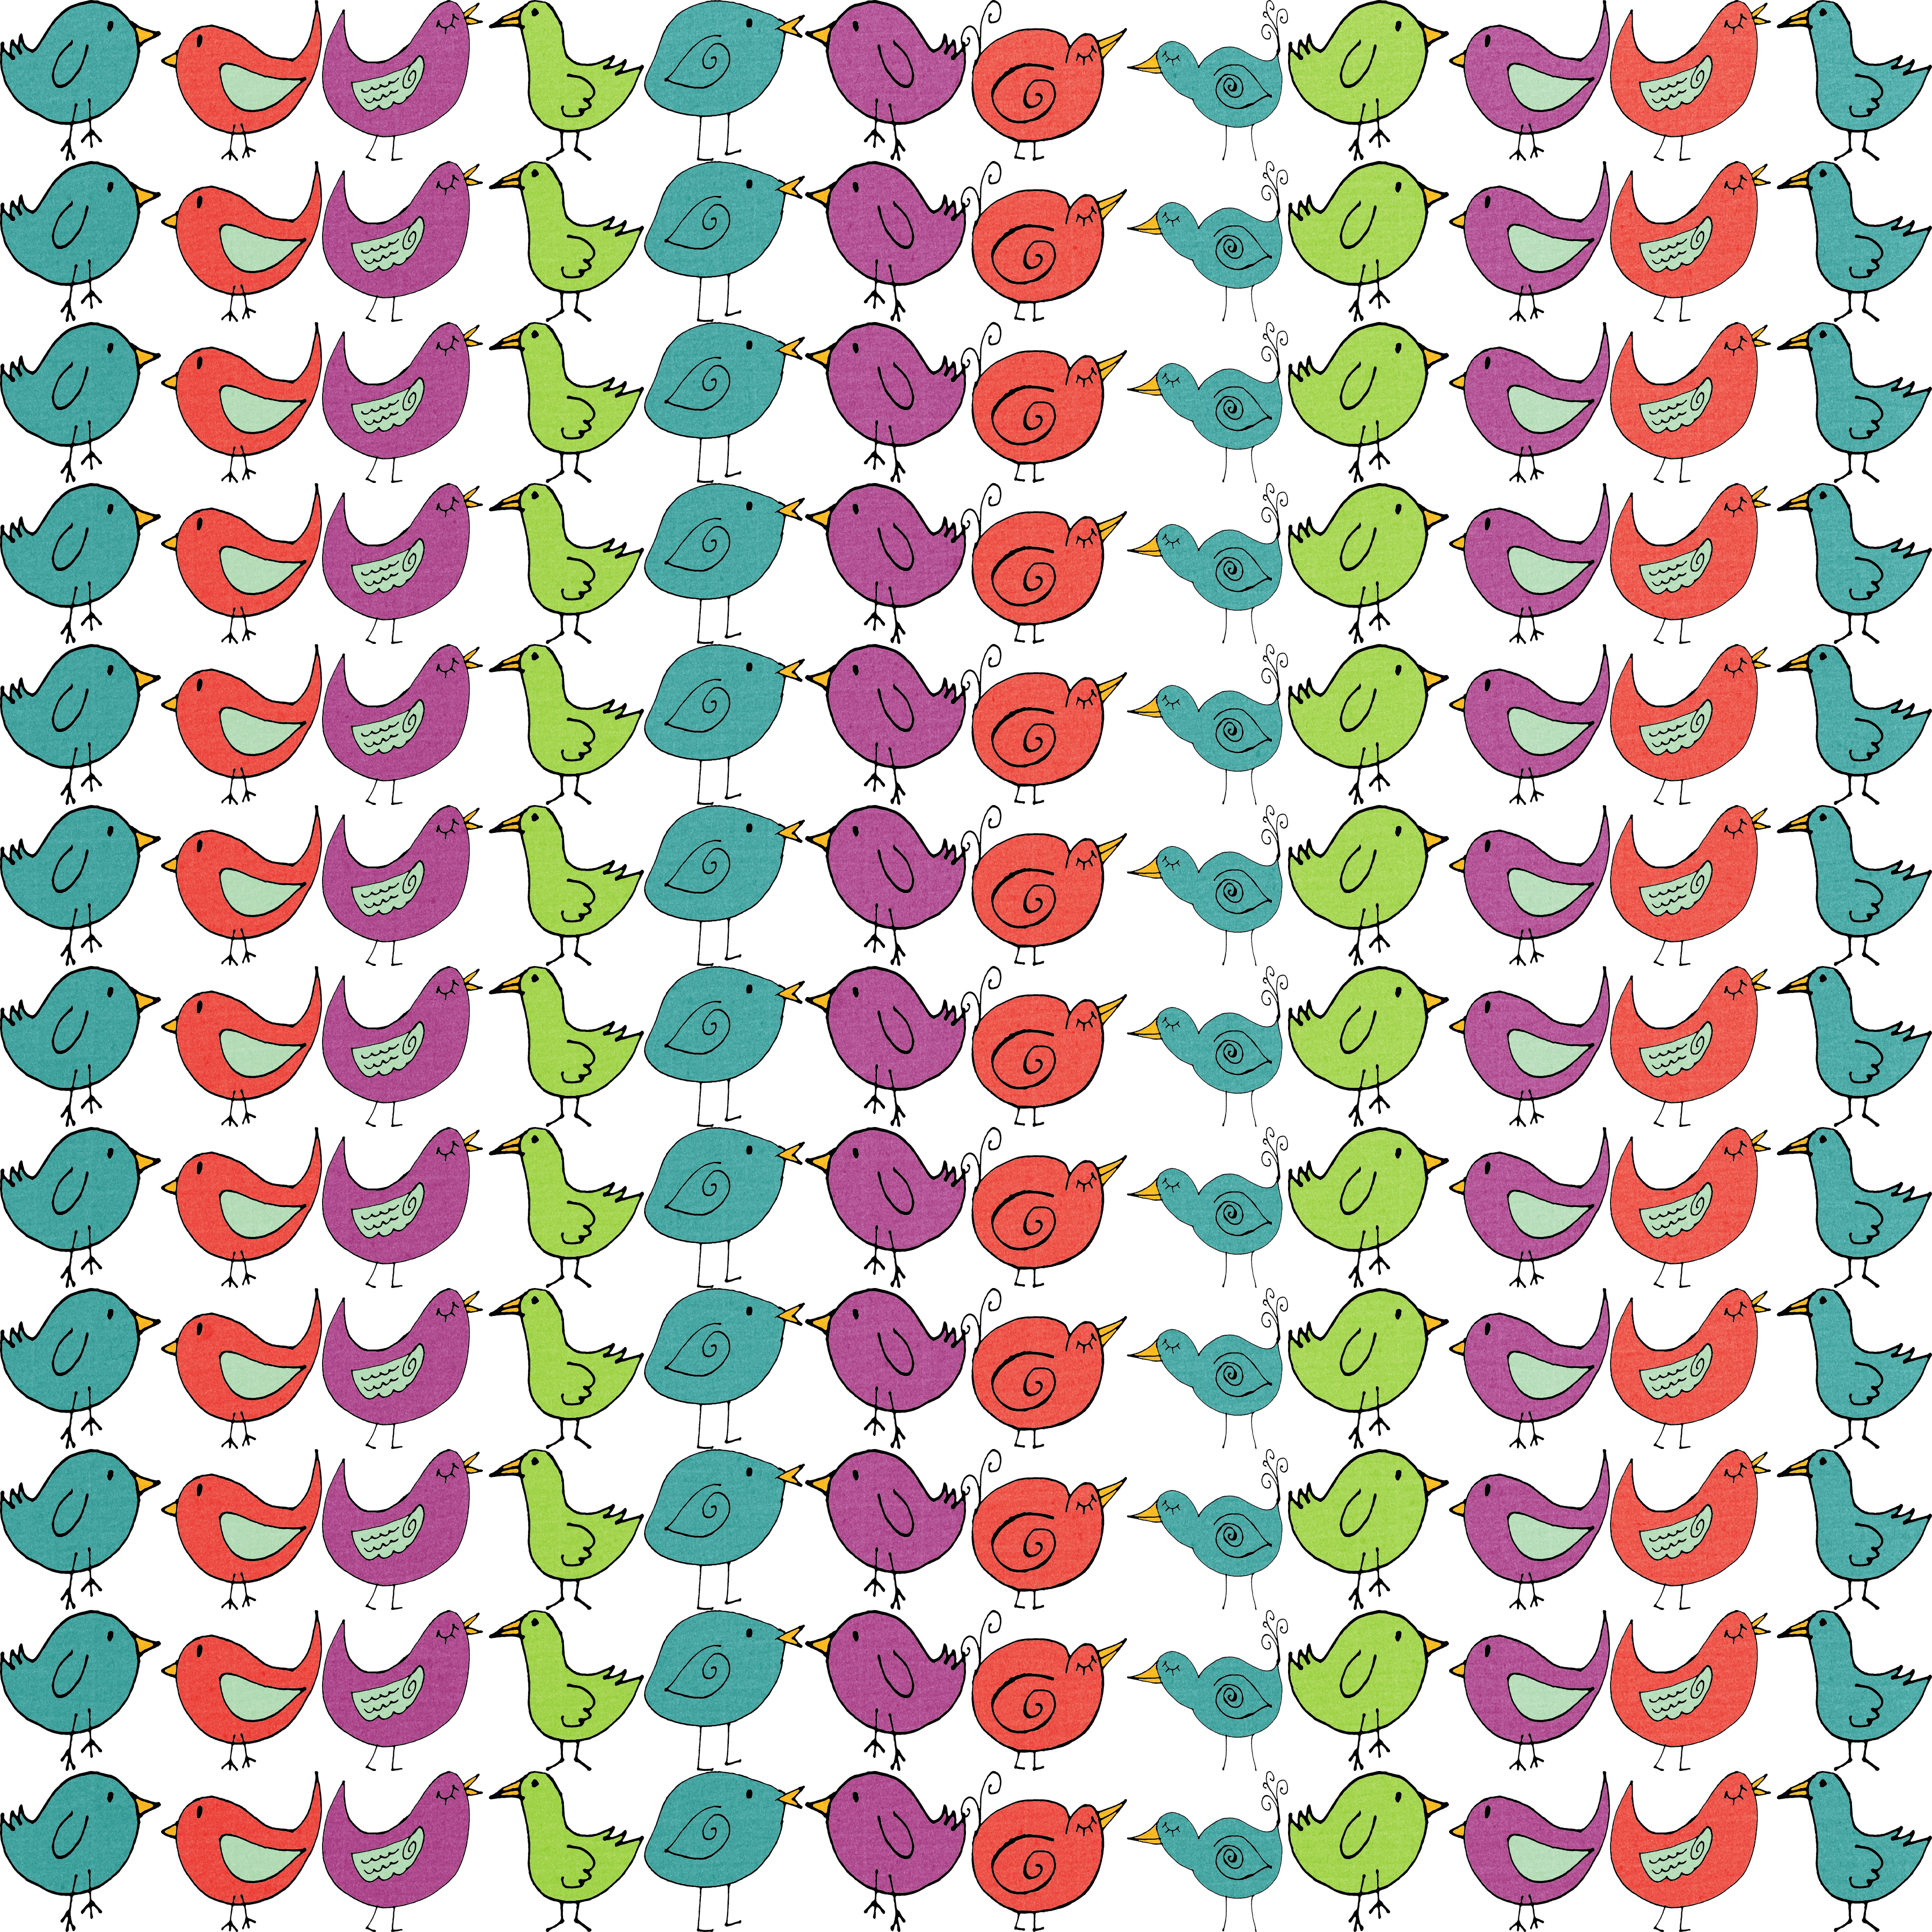 https://cesstrelle.files.wordpress.com/2015/01/hg-cu-colorfulbirds-overlay.png?w=652&h=652